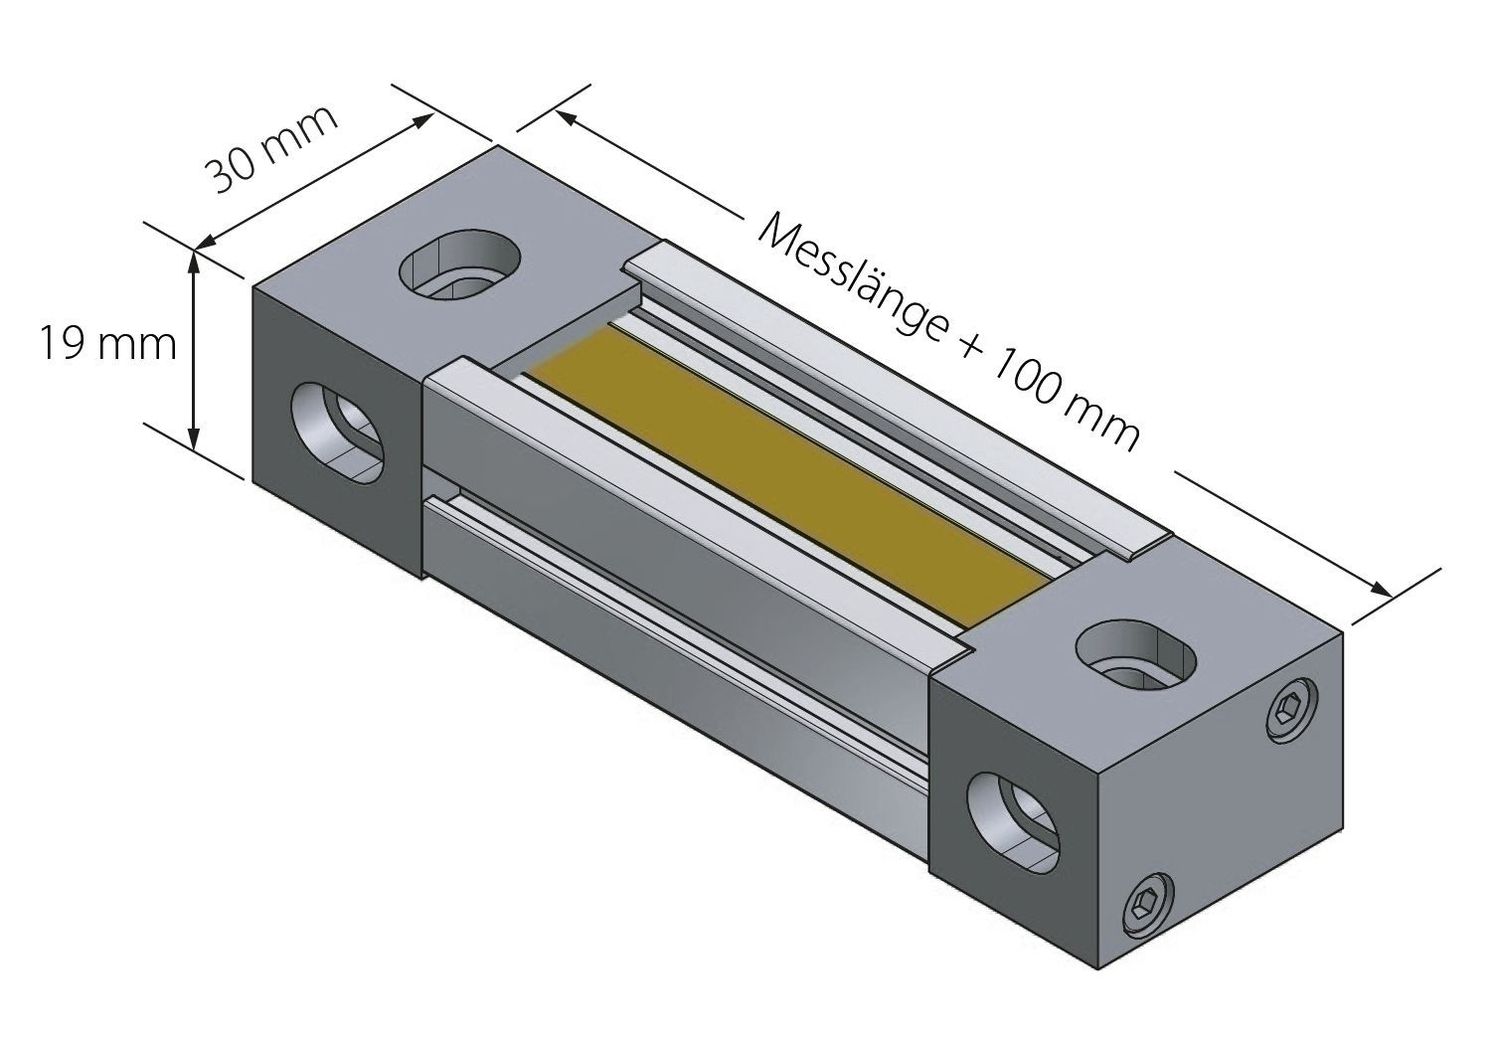 K+C Magnetmaßstab MS10A 1200 mm - 5 µm | Verfahrweg 1220 mm